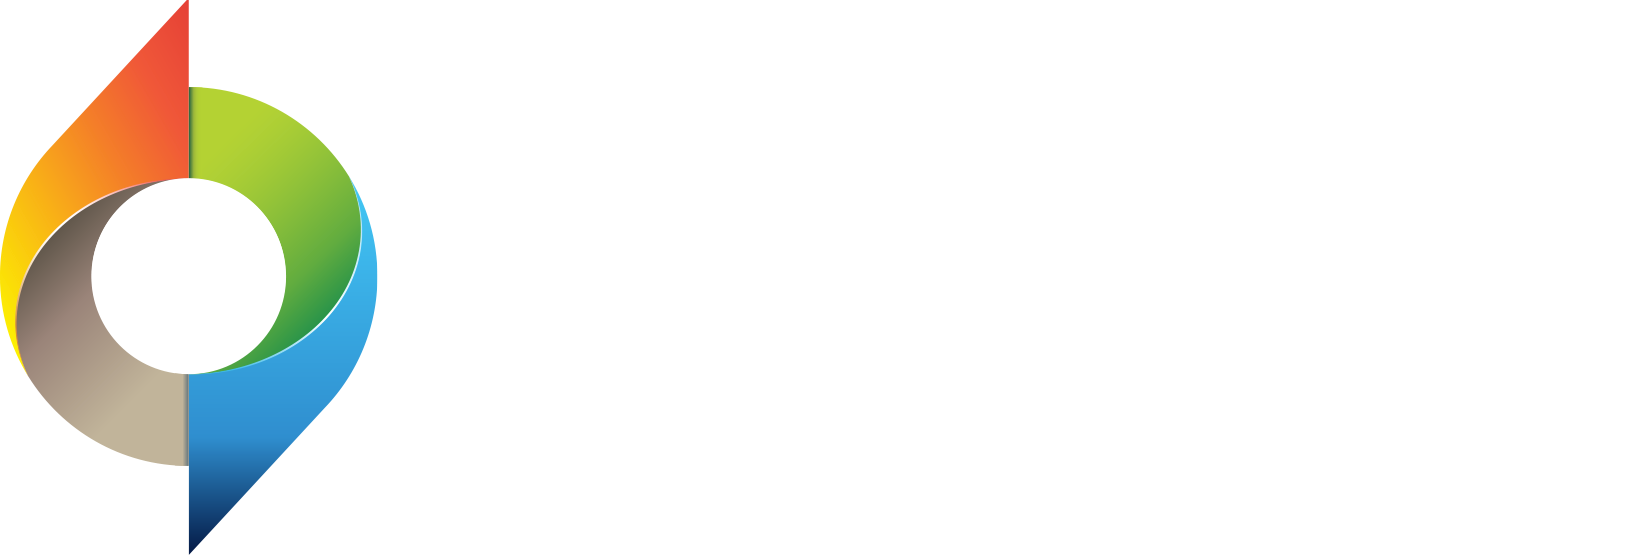 Rotay Capital Finance's Logo